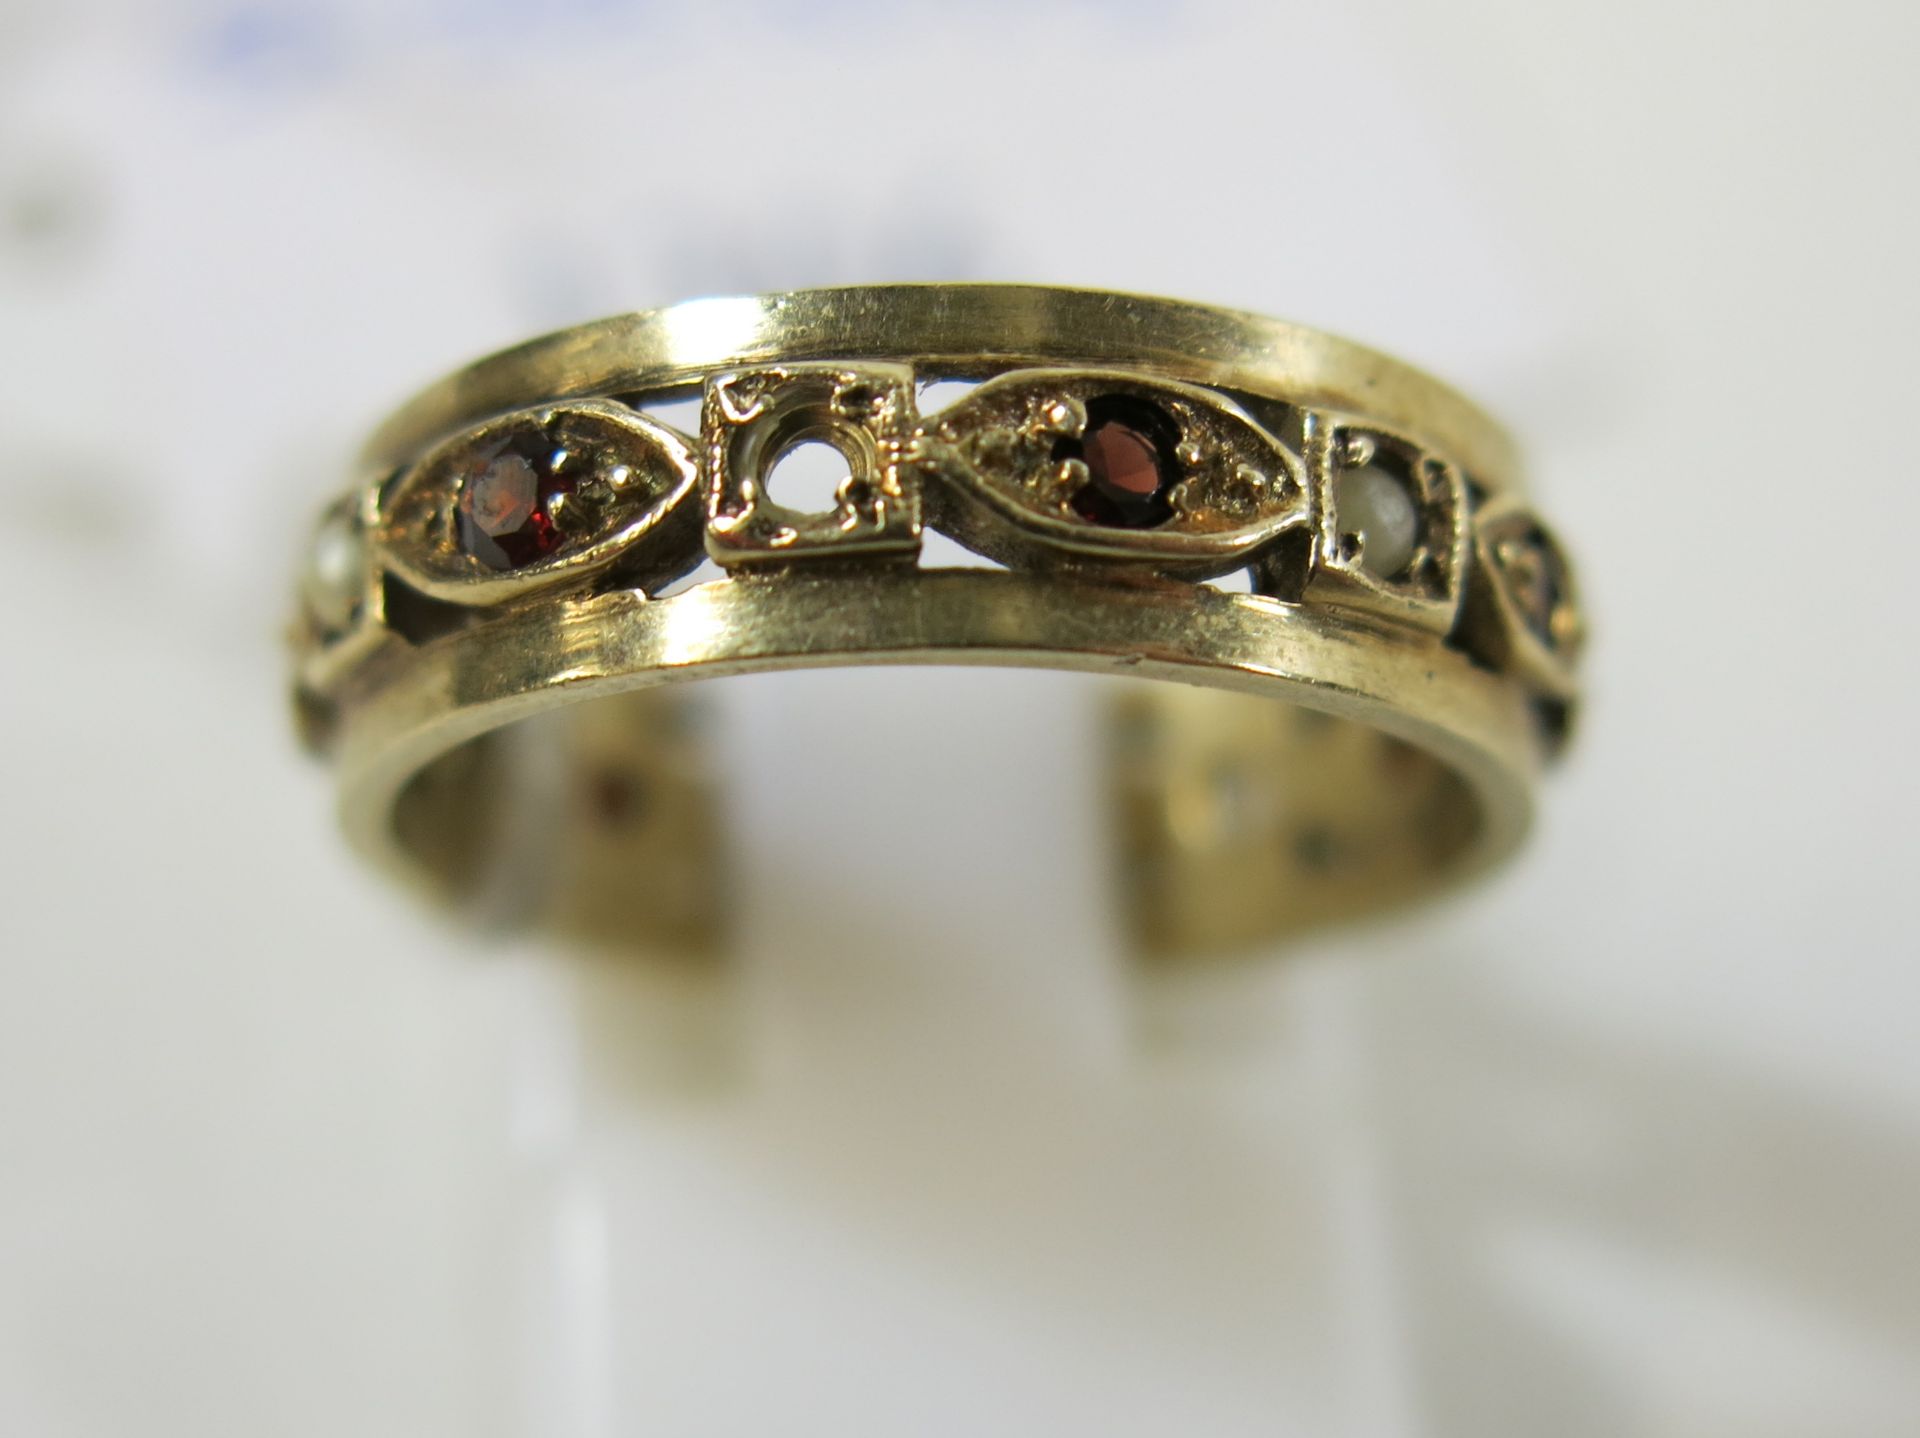 A 9ct gold pearl & garnet eternity ring (size N½) (est £20-£40)